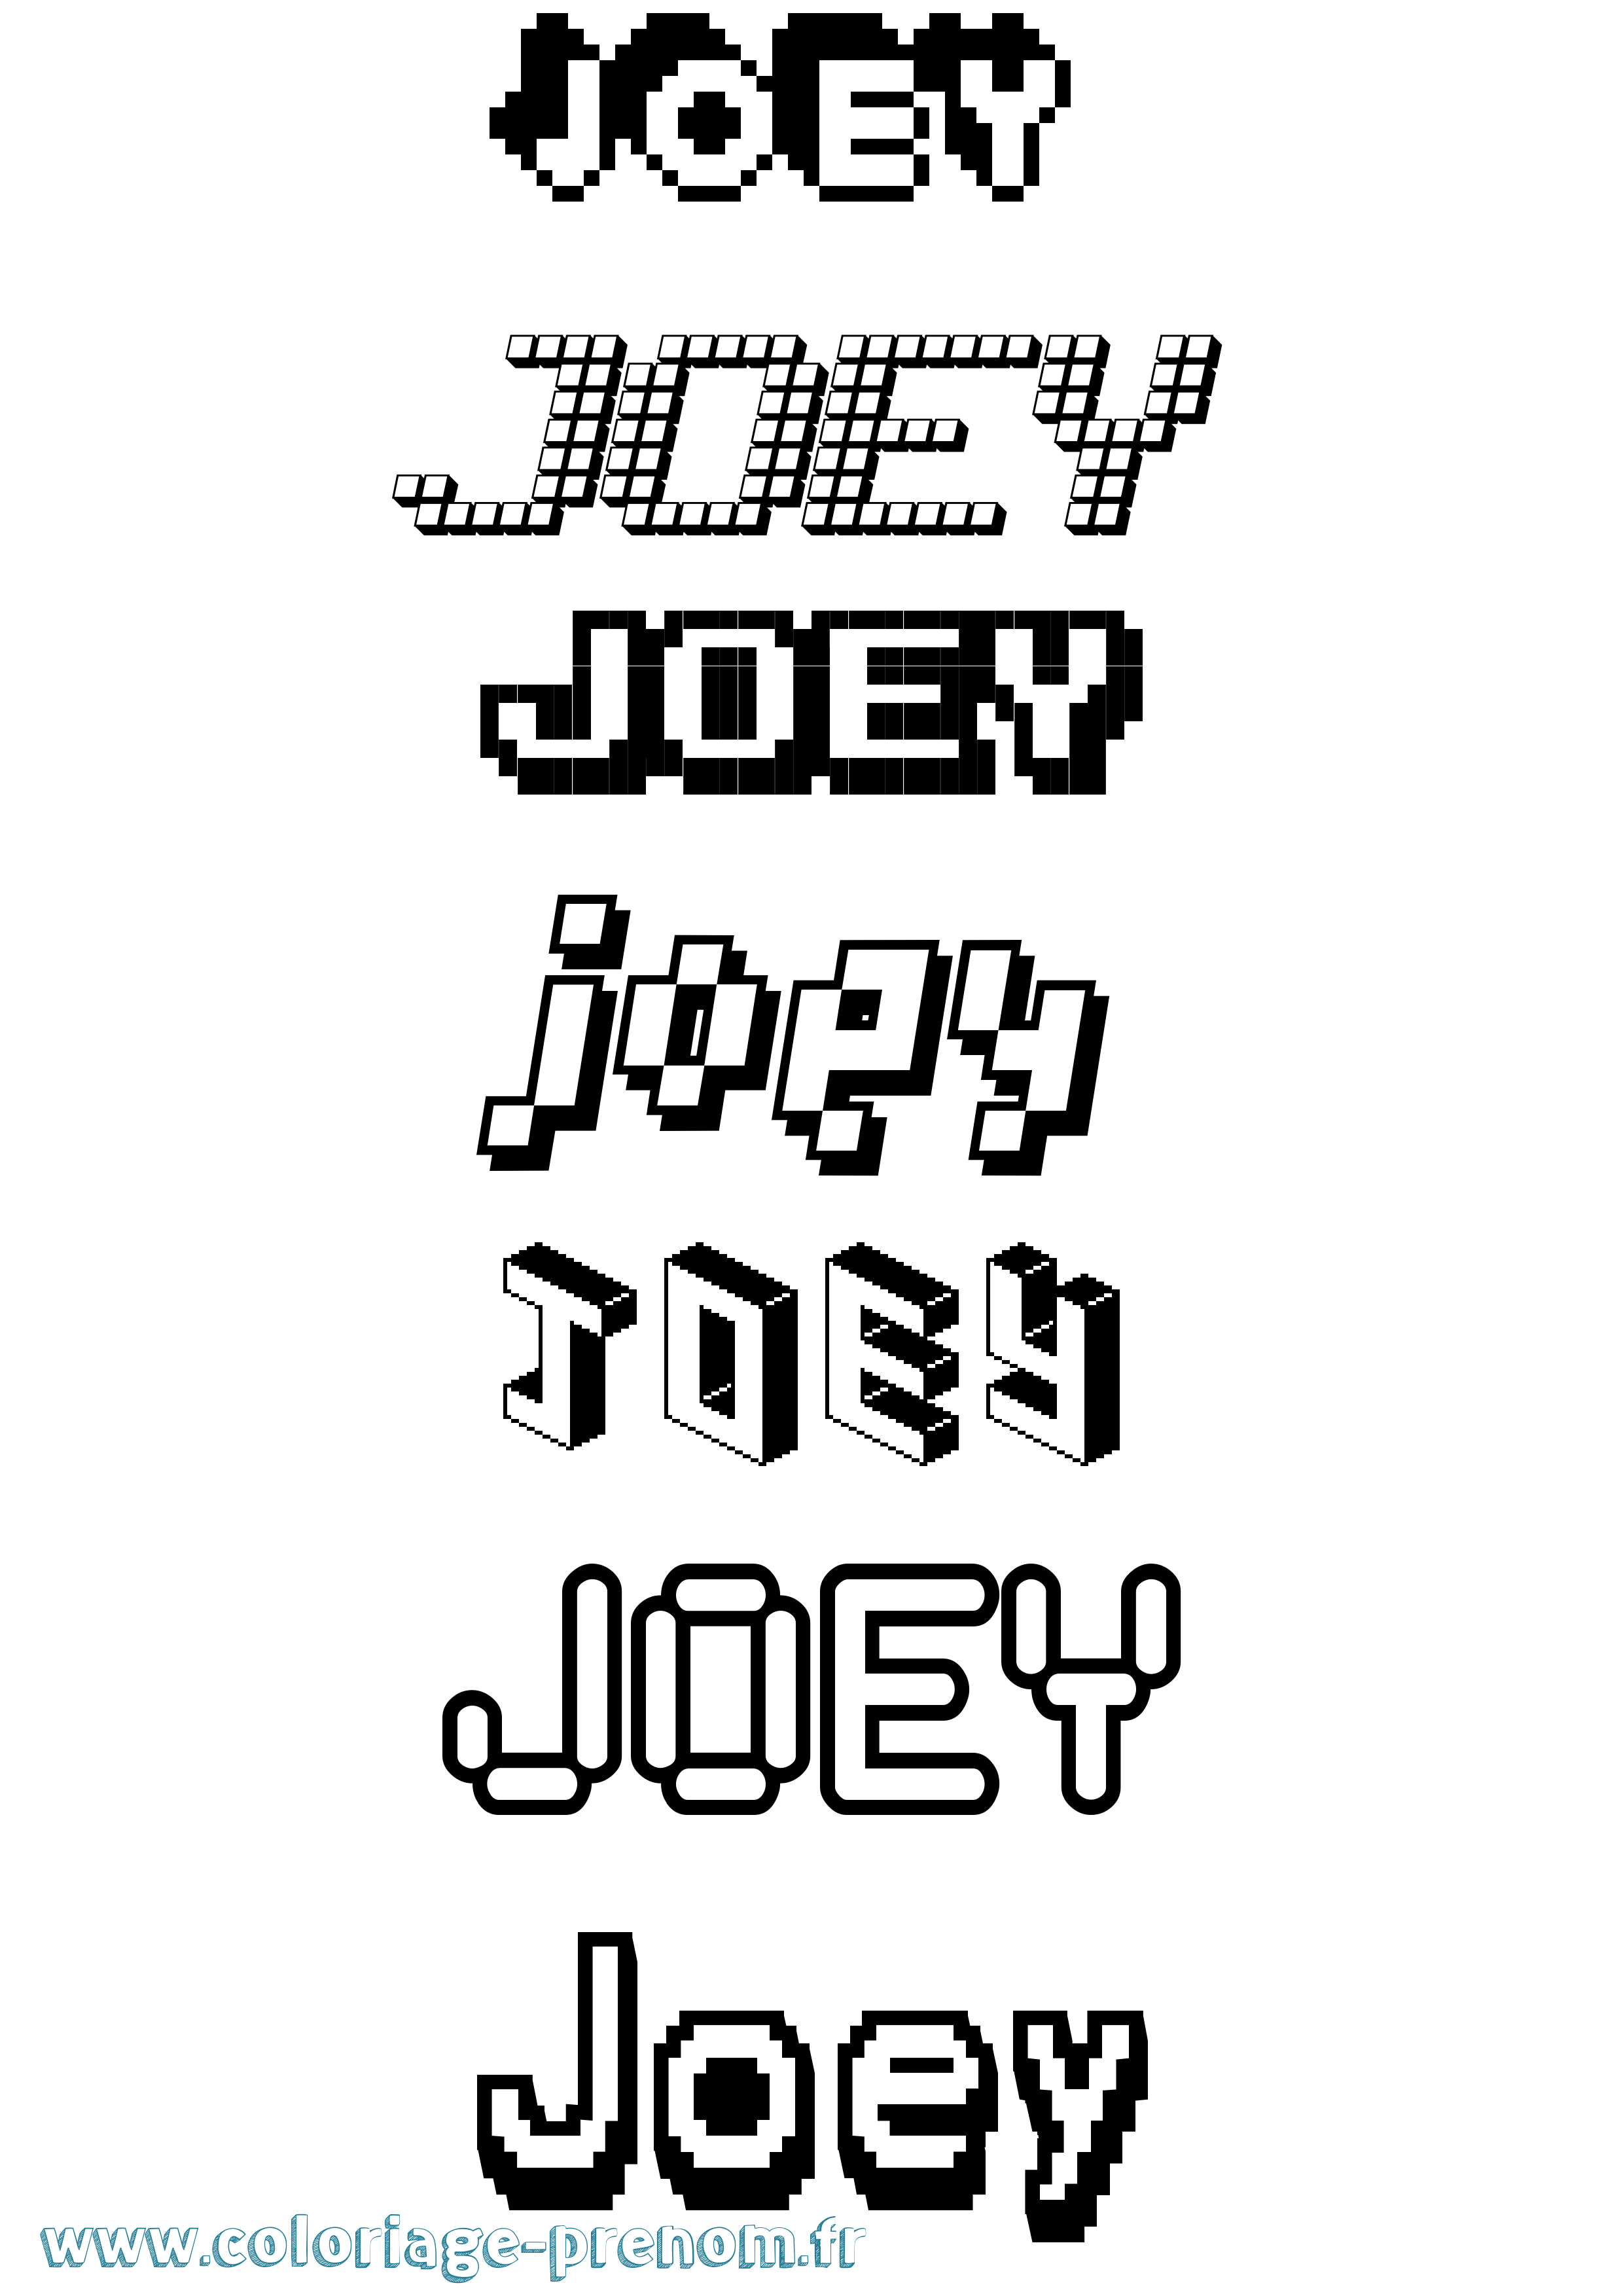 Coloriage prénom Joey Pixel